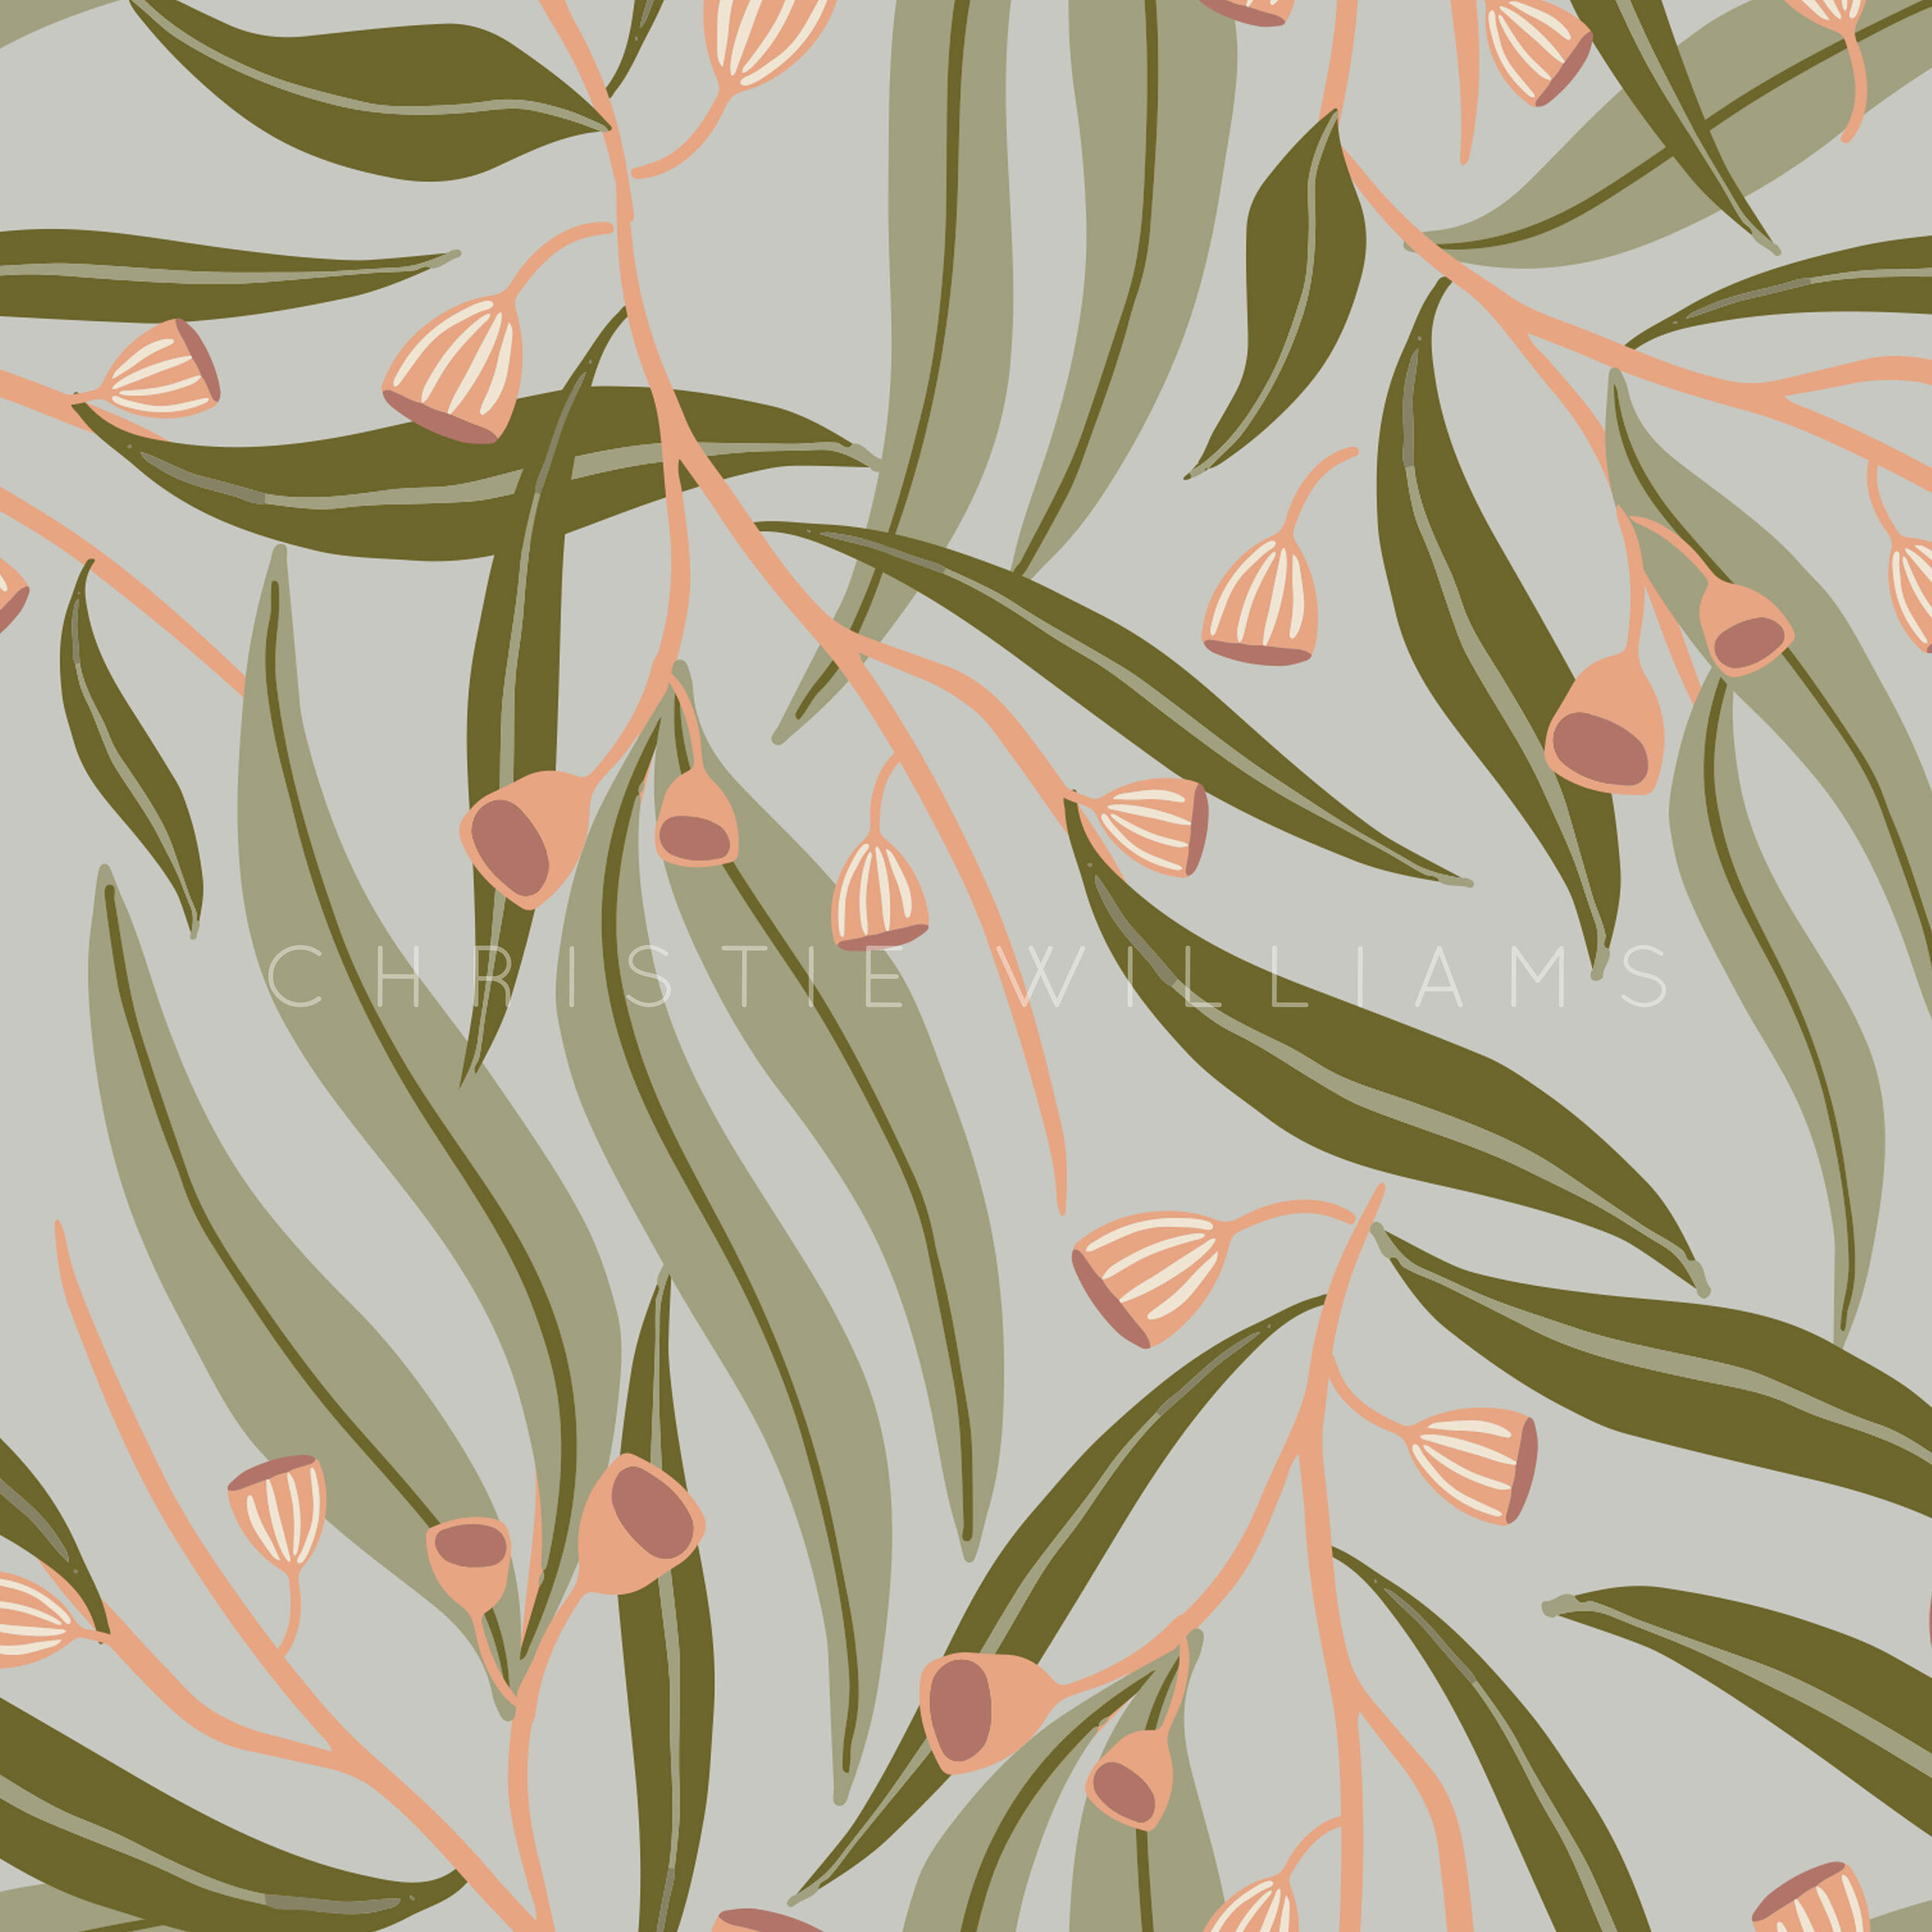 Christie Williams Surface pattern Design Australia-75.jpg